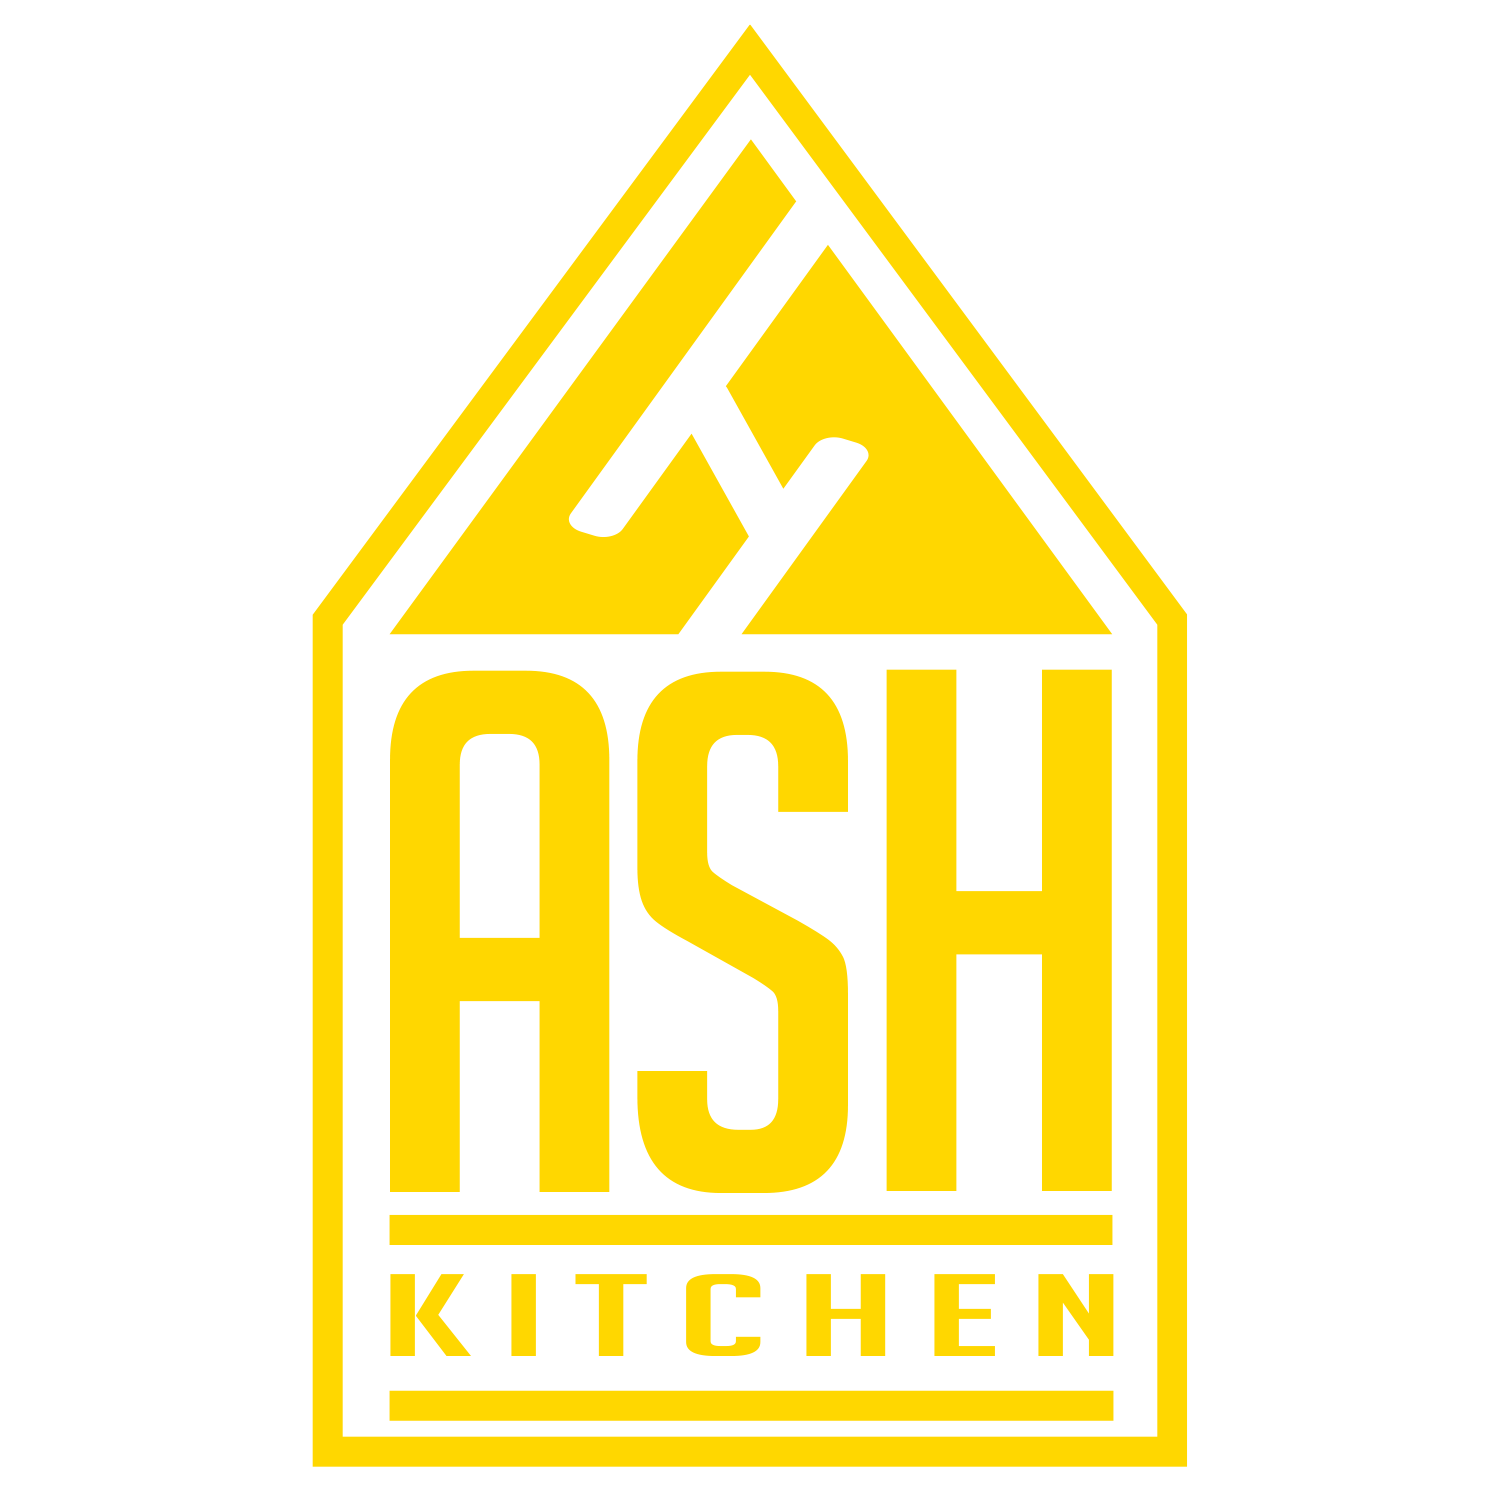 Ash Kitchen Inc.